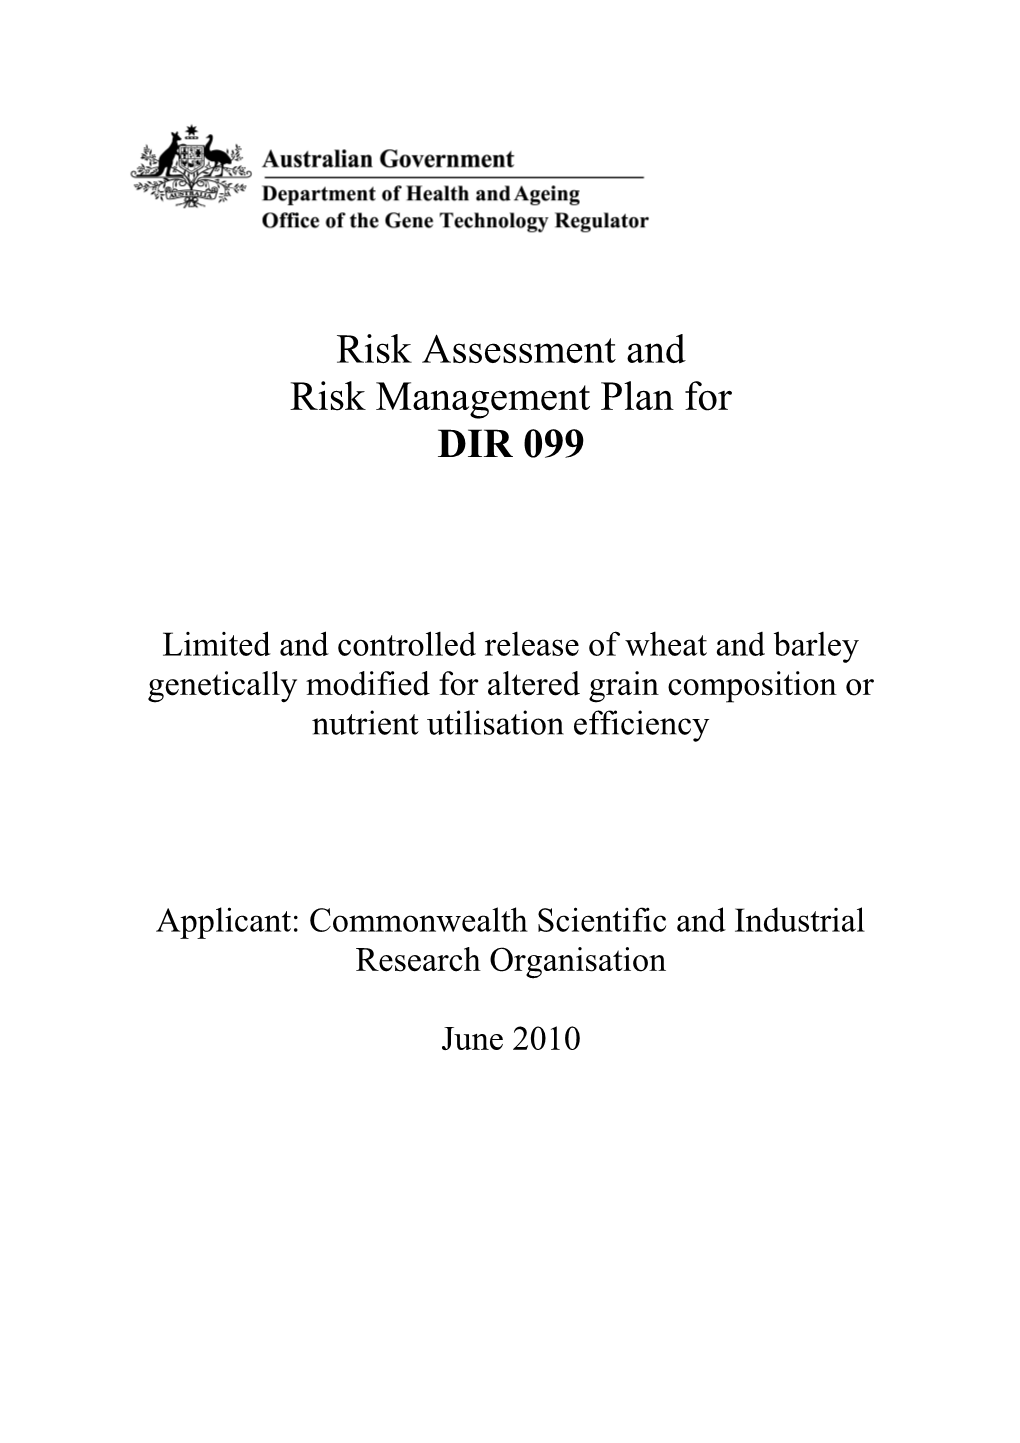 DIR 099 - Risk Assessment and Risk Management Plan